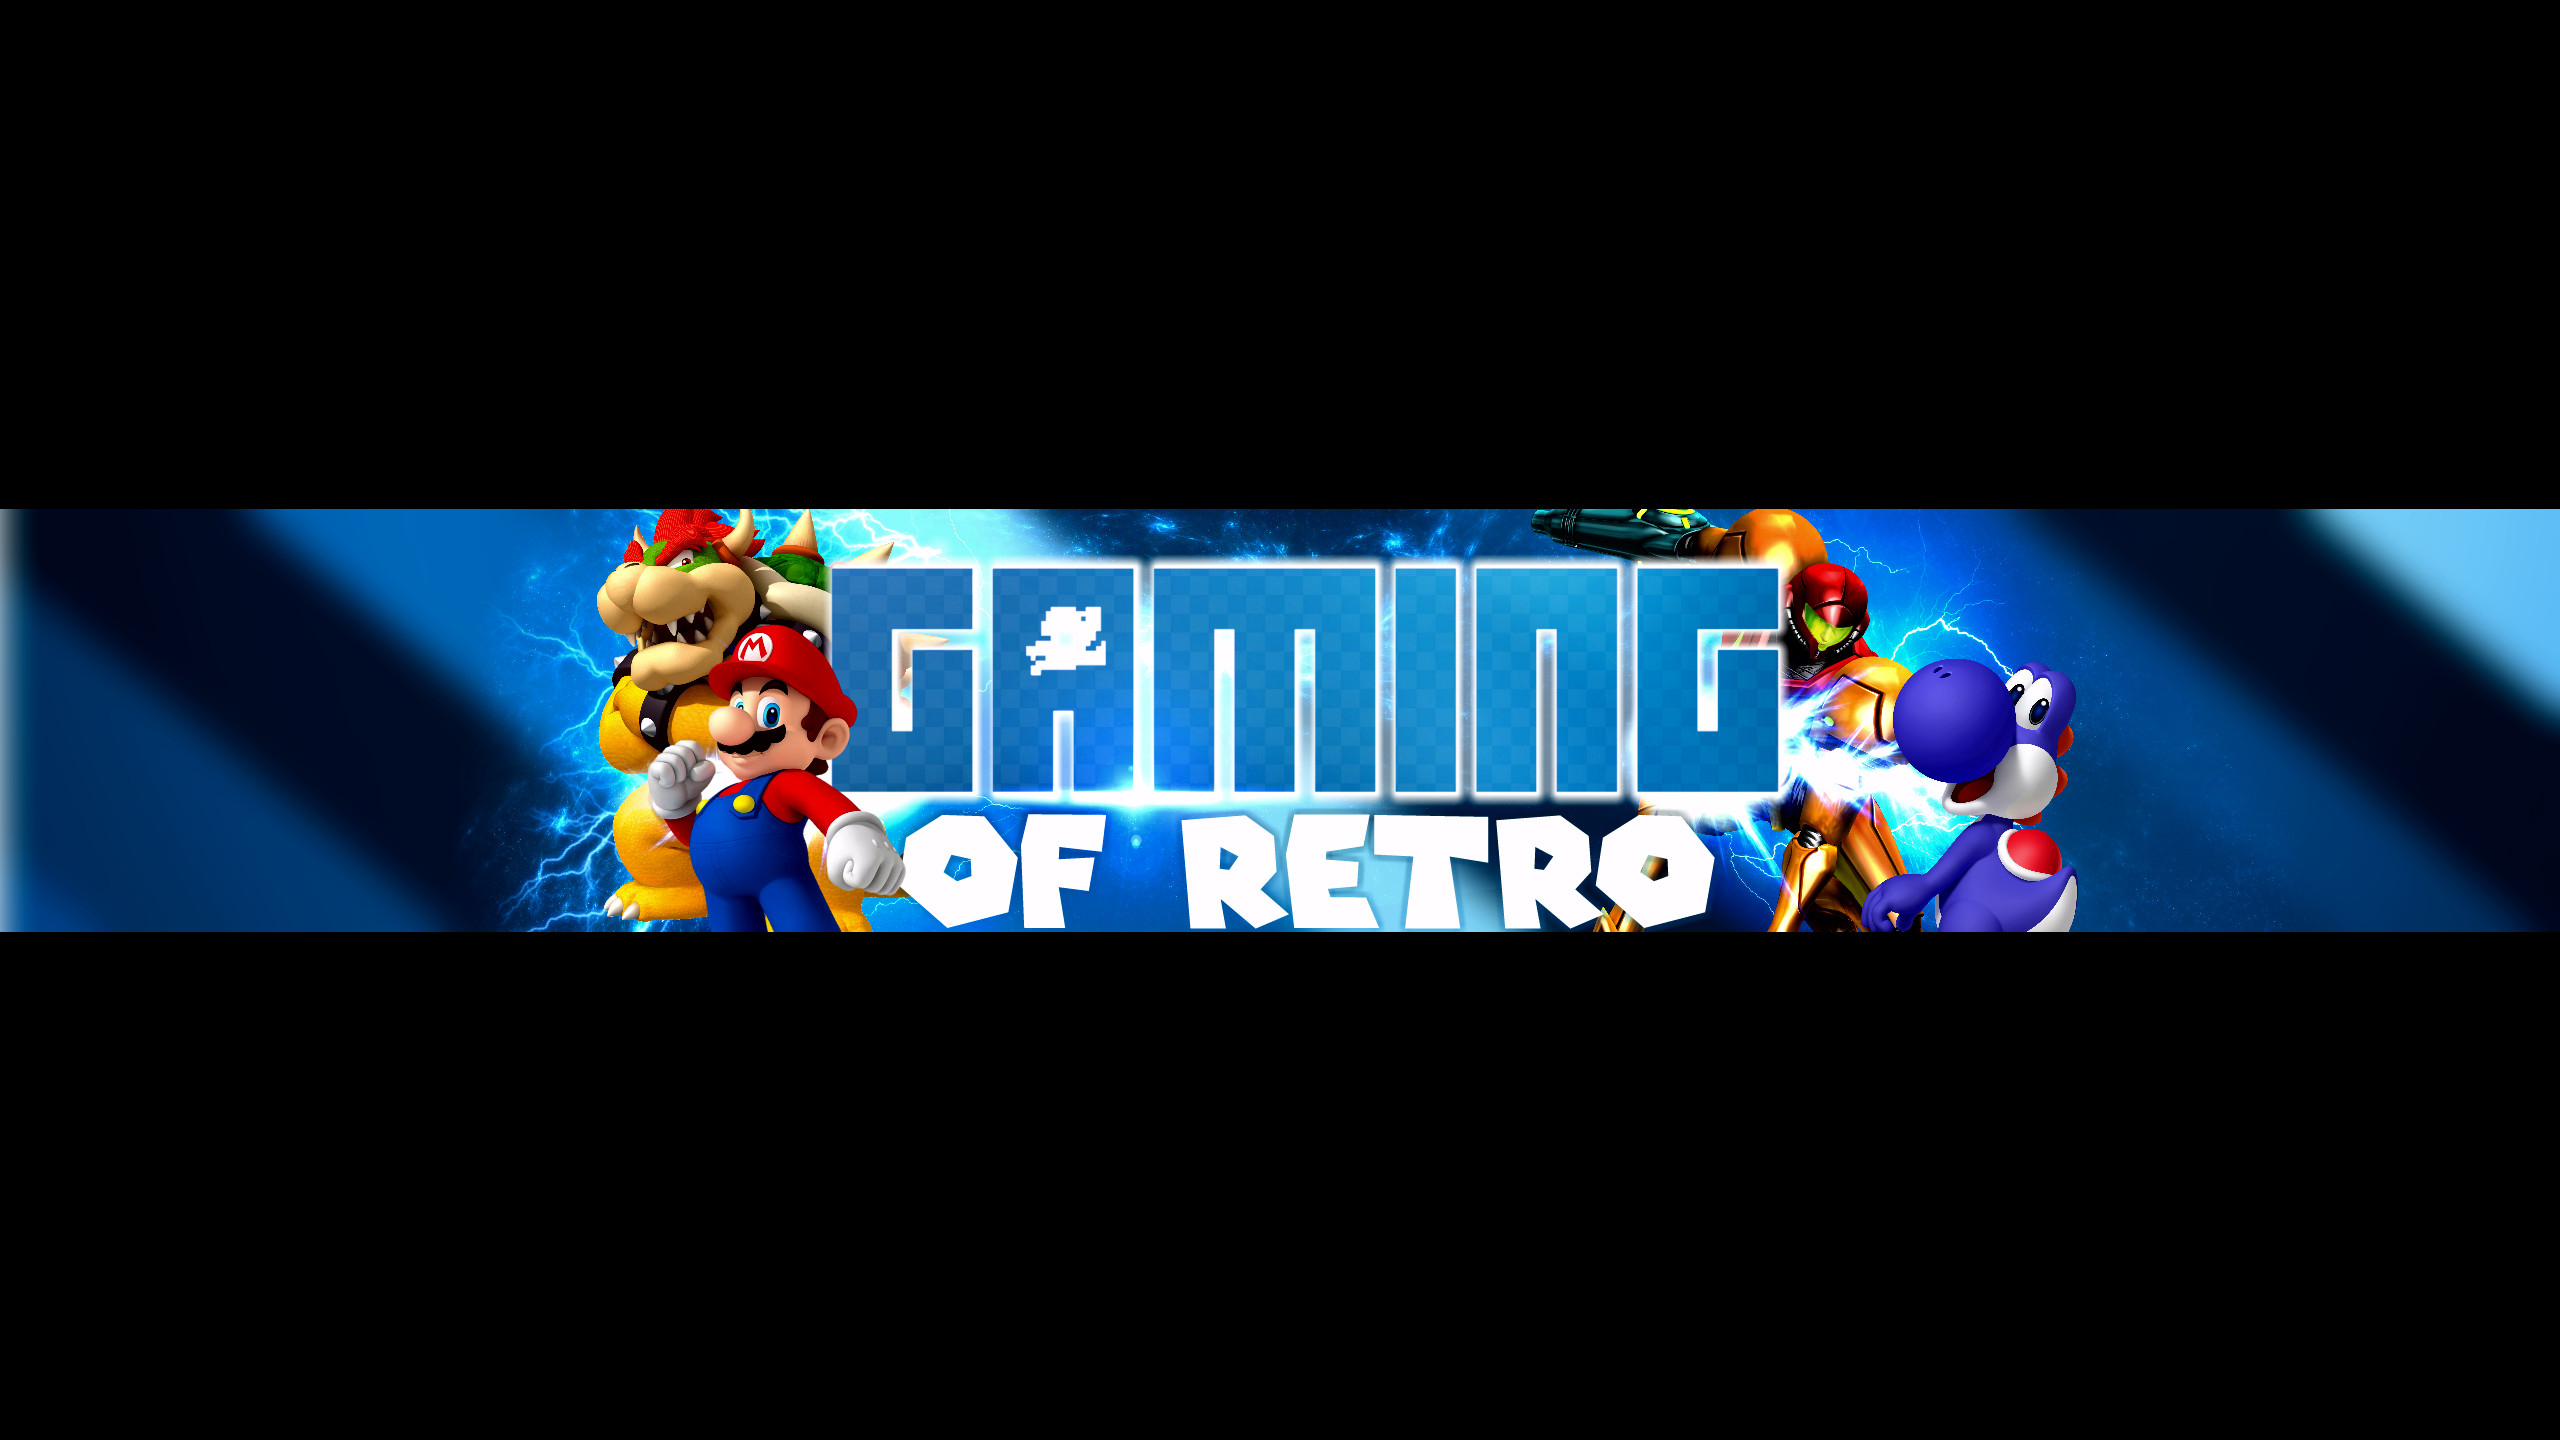 2560x1440 ... Gaming of Retro - YouTube Banner by NitroRex by NitroRex